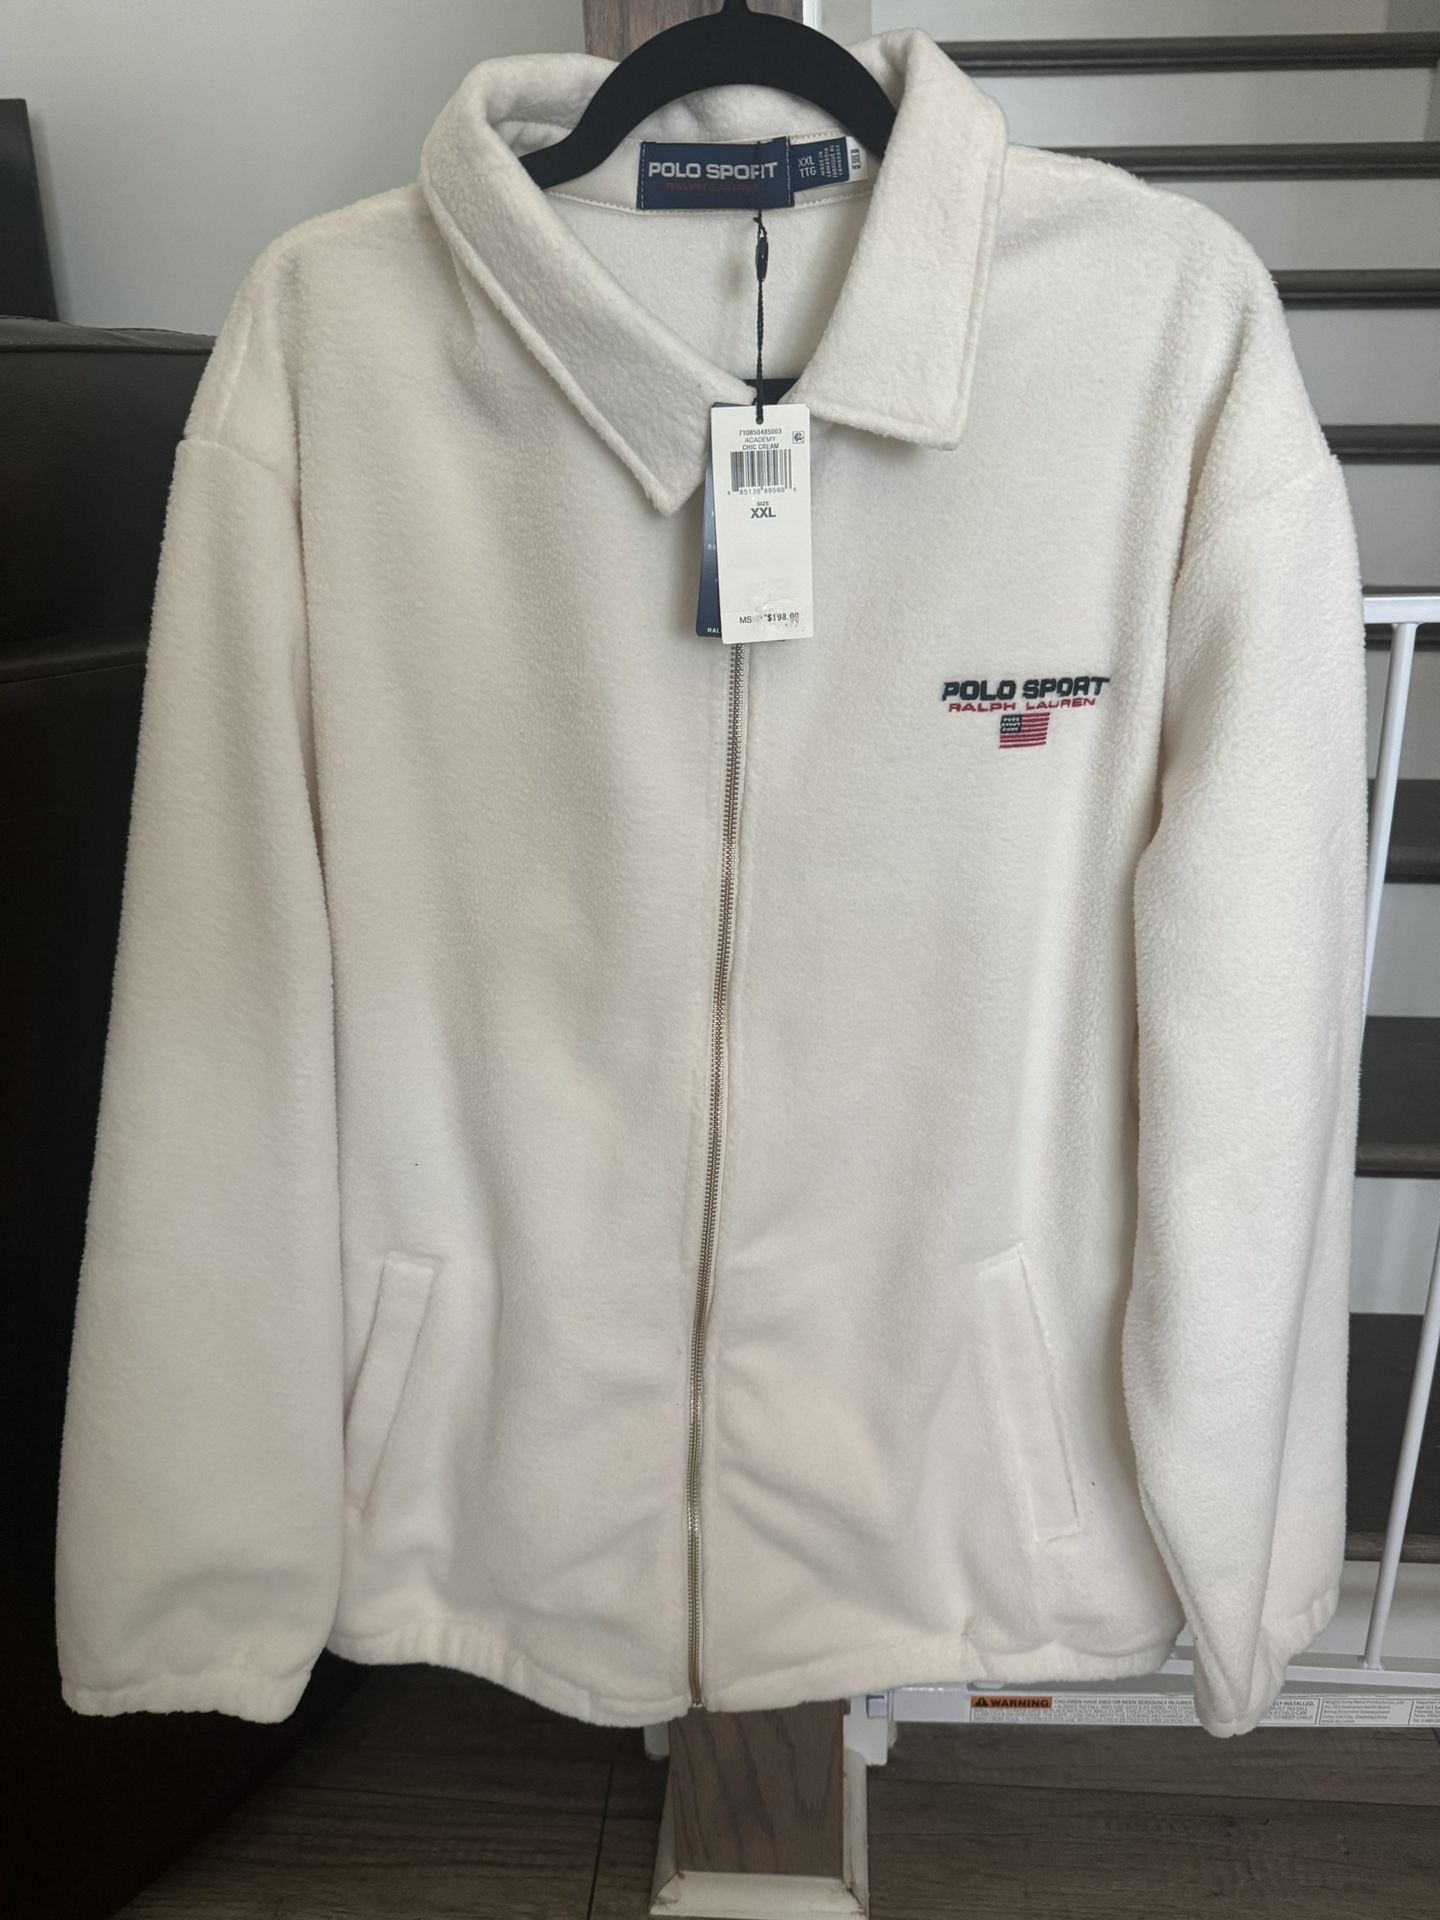 Ralph Lauren Polo Sport fleece jacket **BRAND NEW**